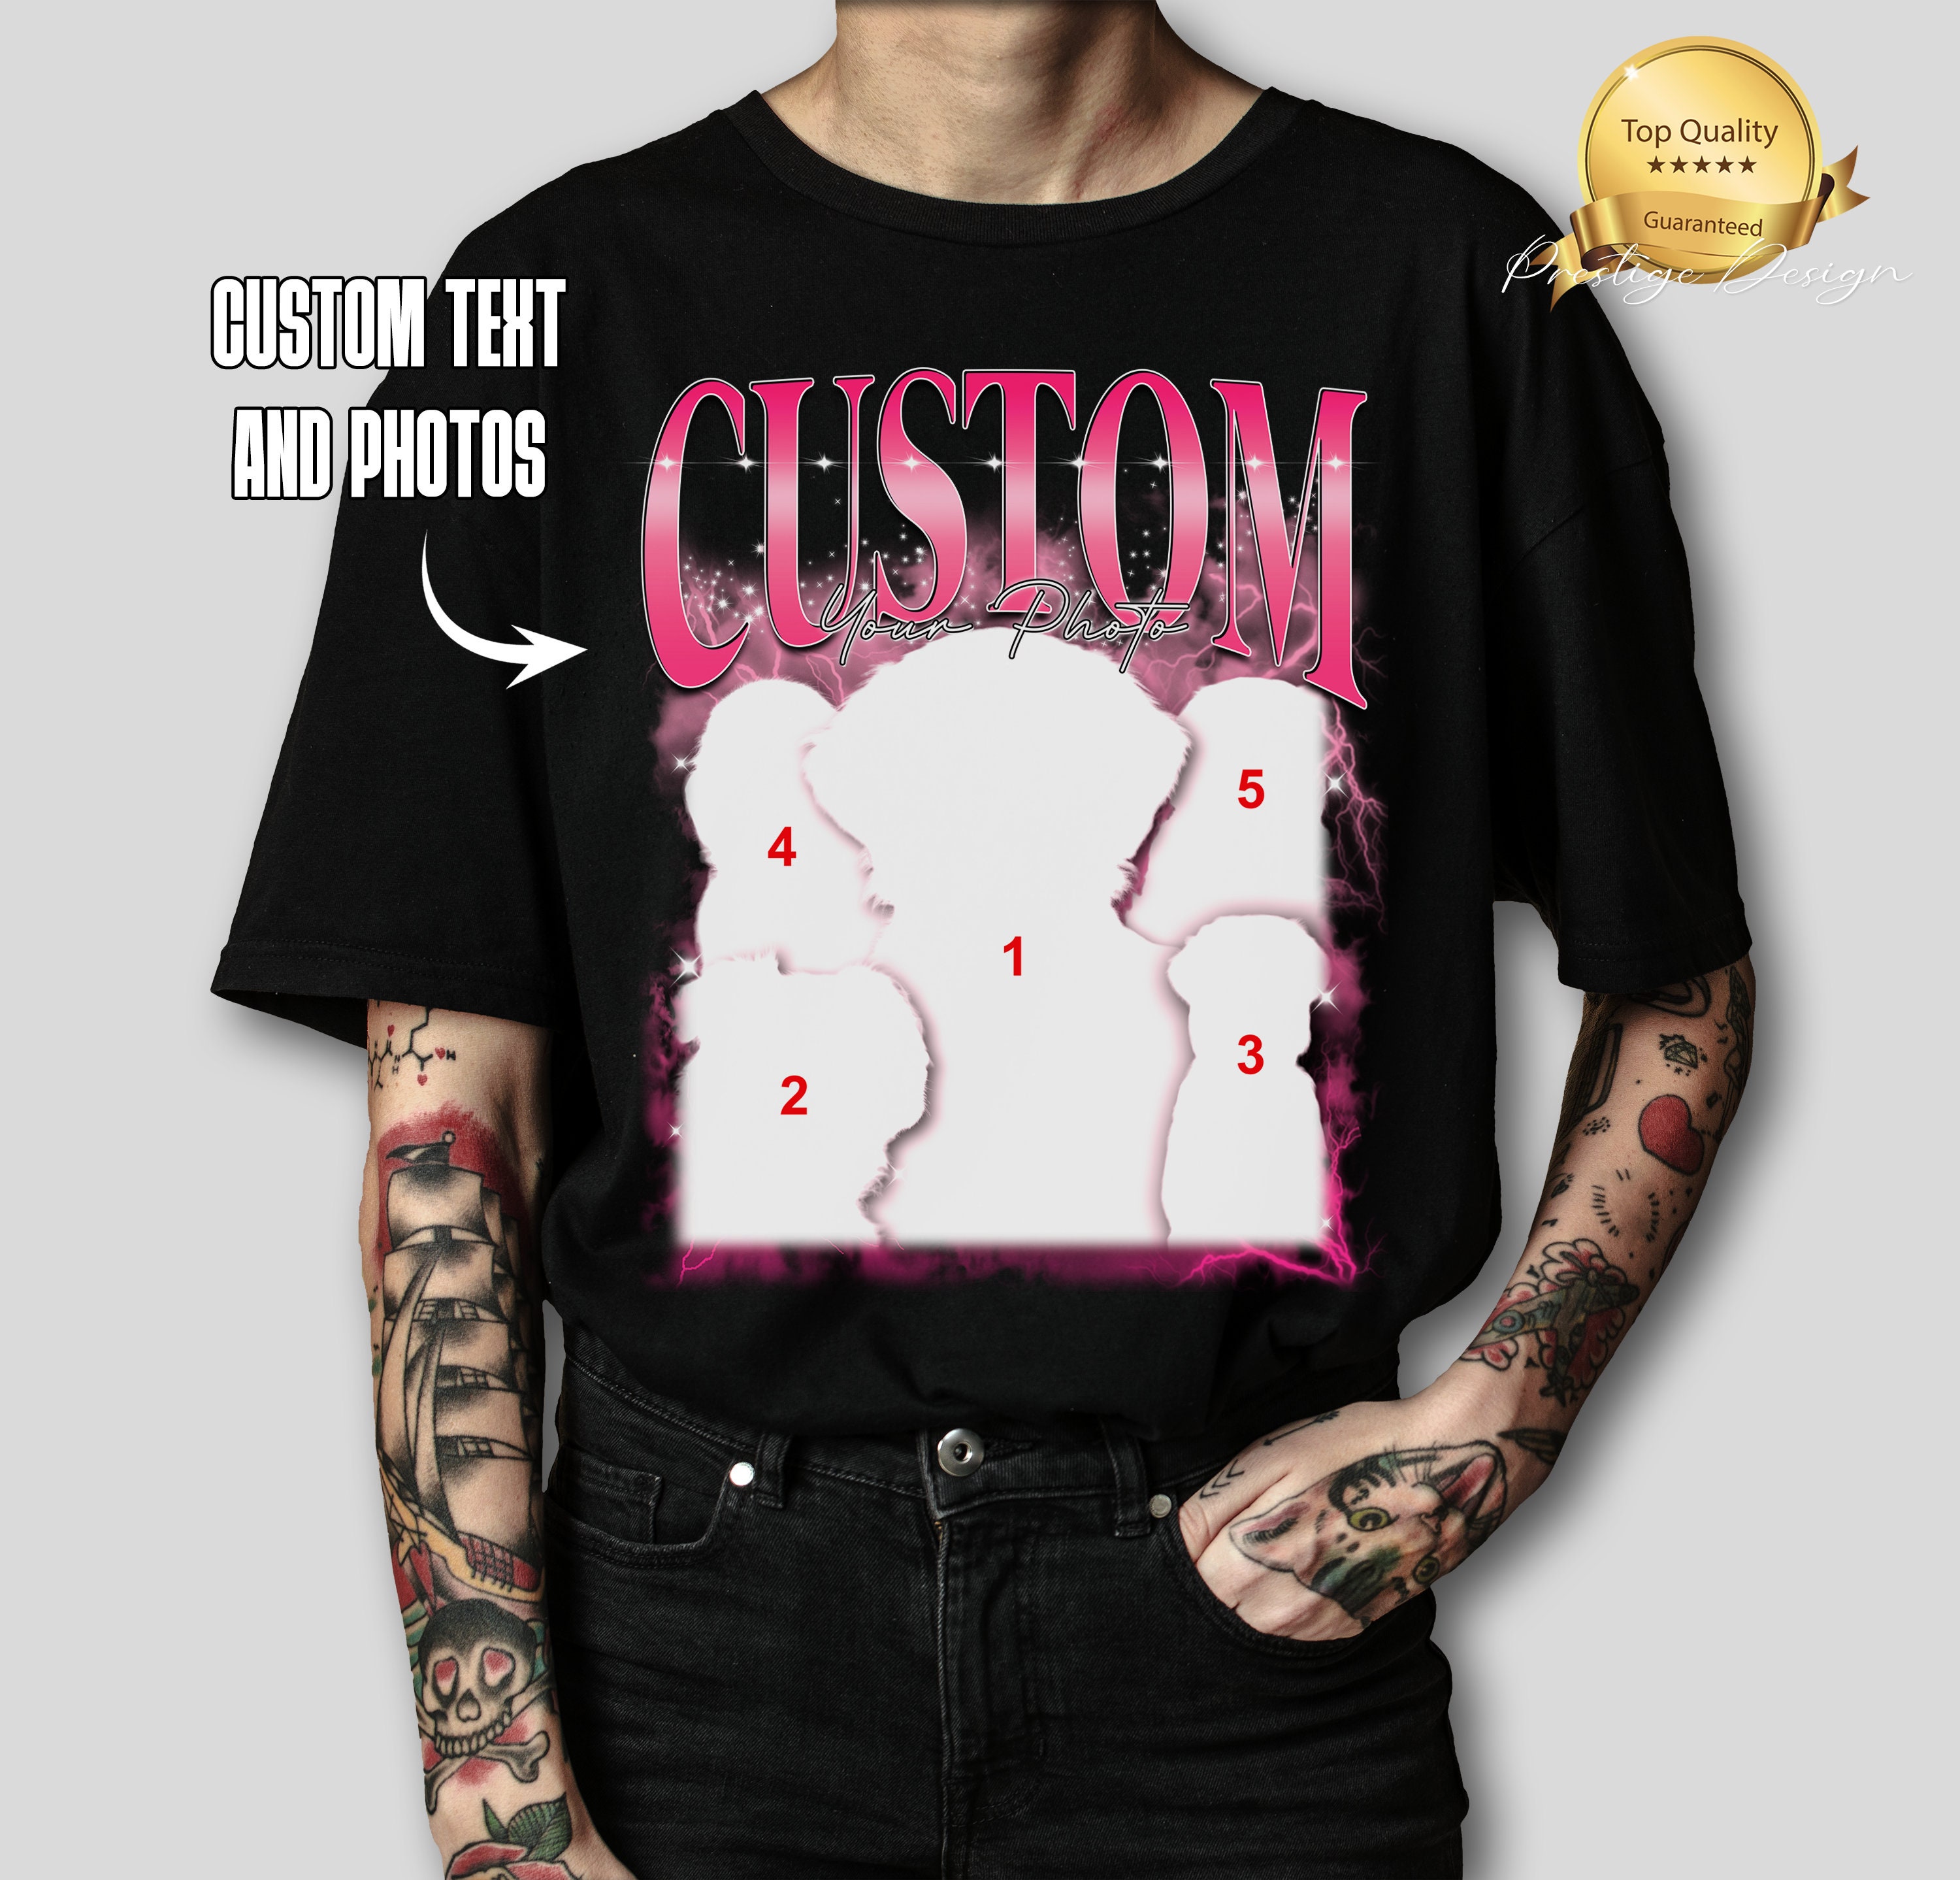 Custom Bootleg Rap Tee, pet custom t shirt, custom bootleg shirt